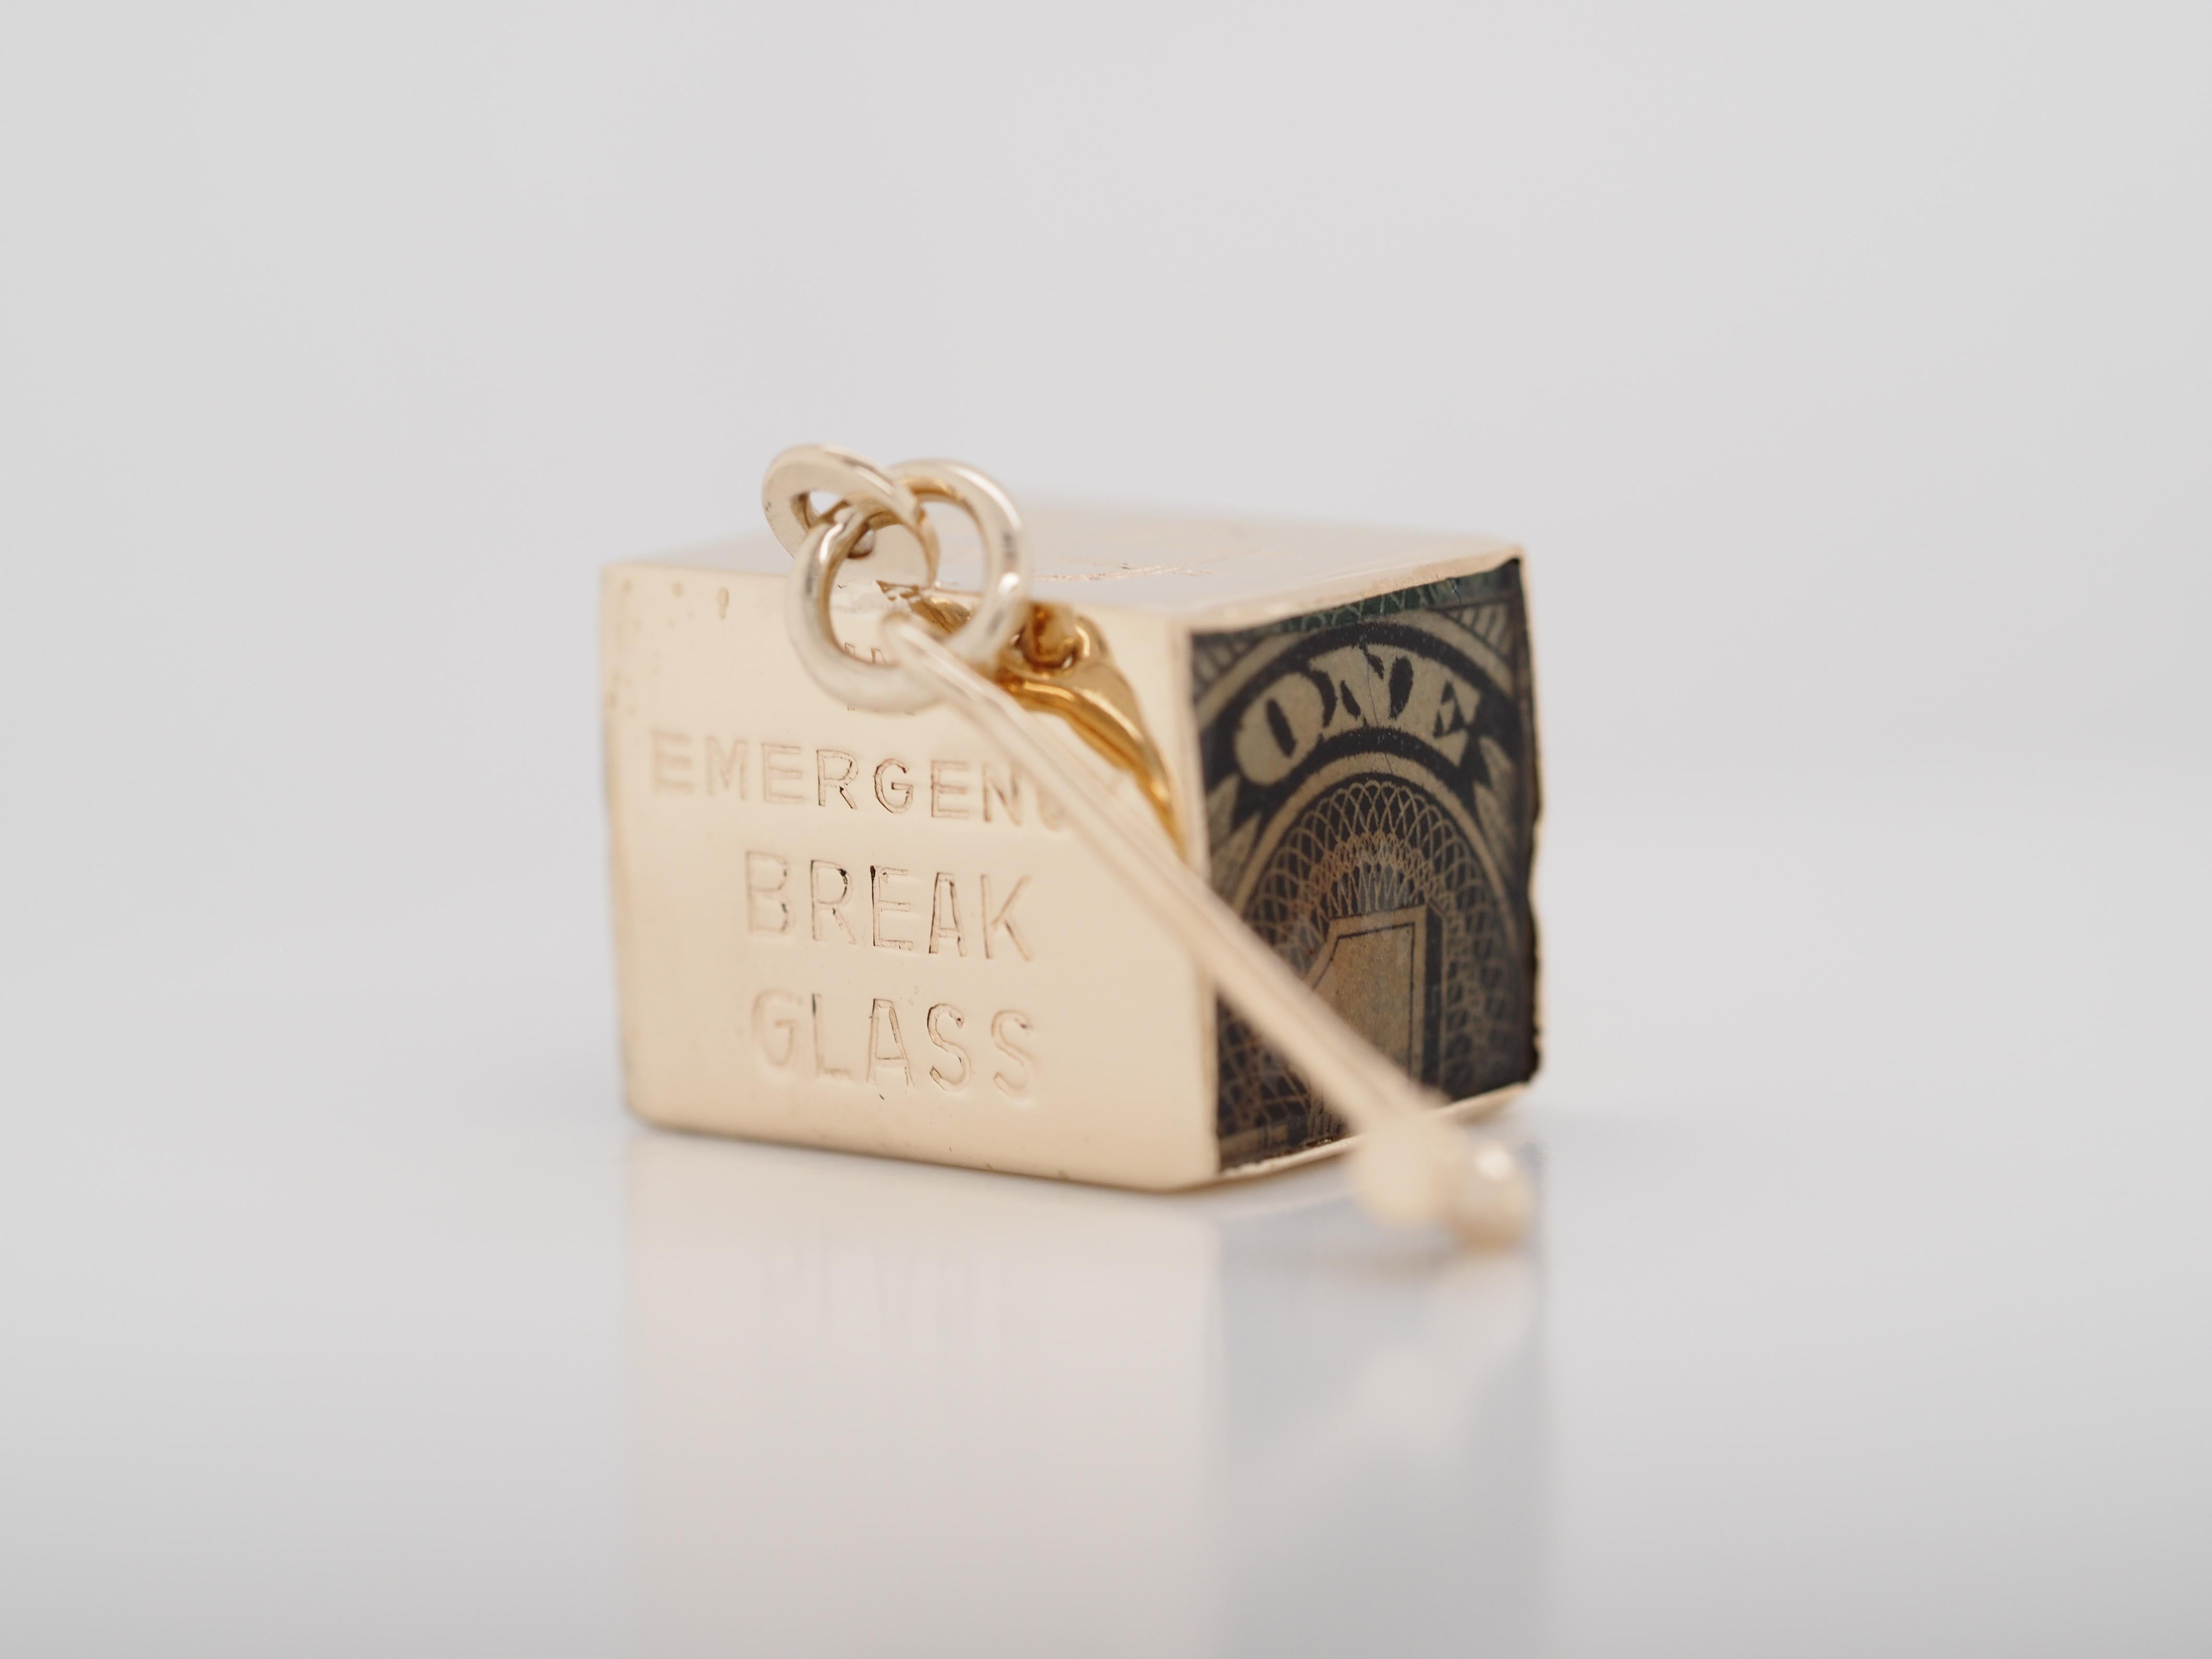 Vintage 14k Yellow Gold in Emergency Break Glass Dollar Charm Pendant 1